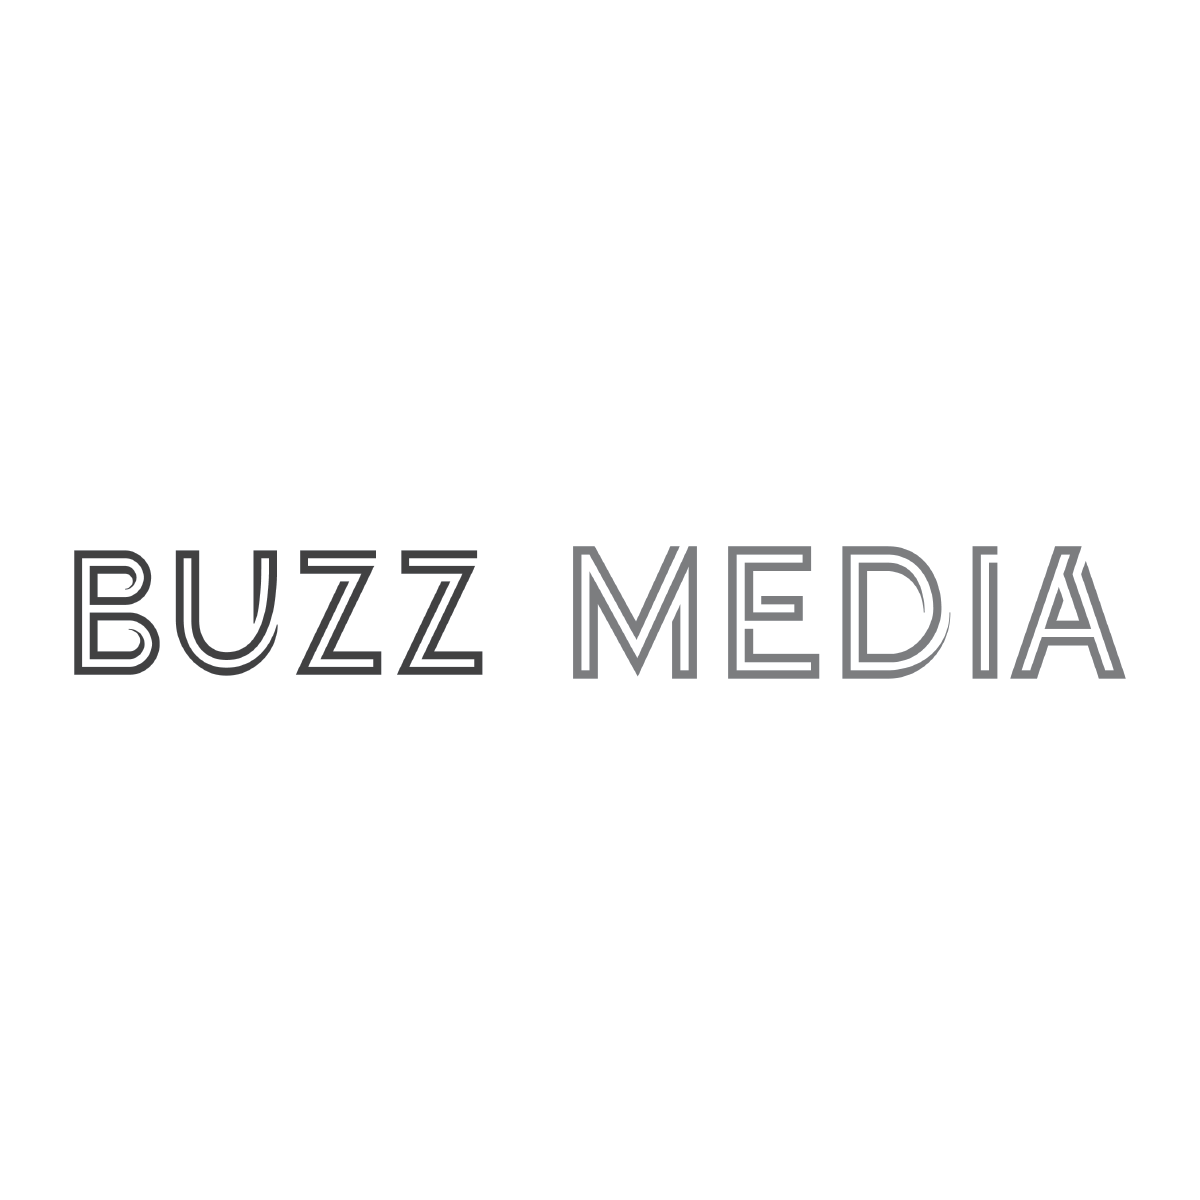 Buzz Media logo